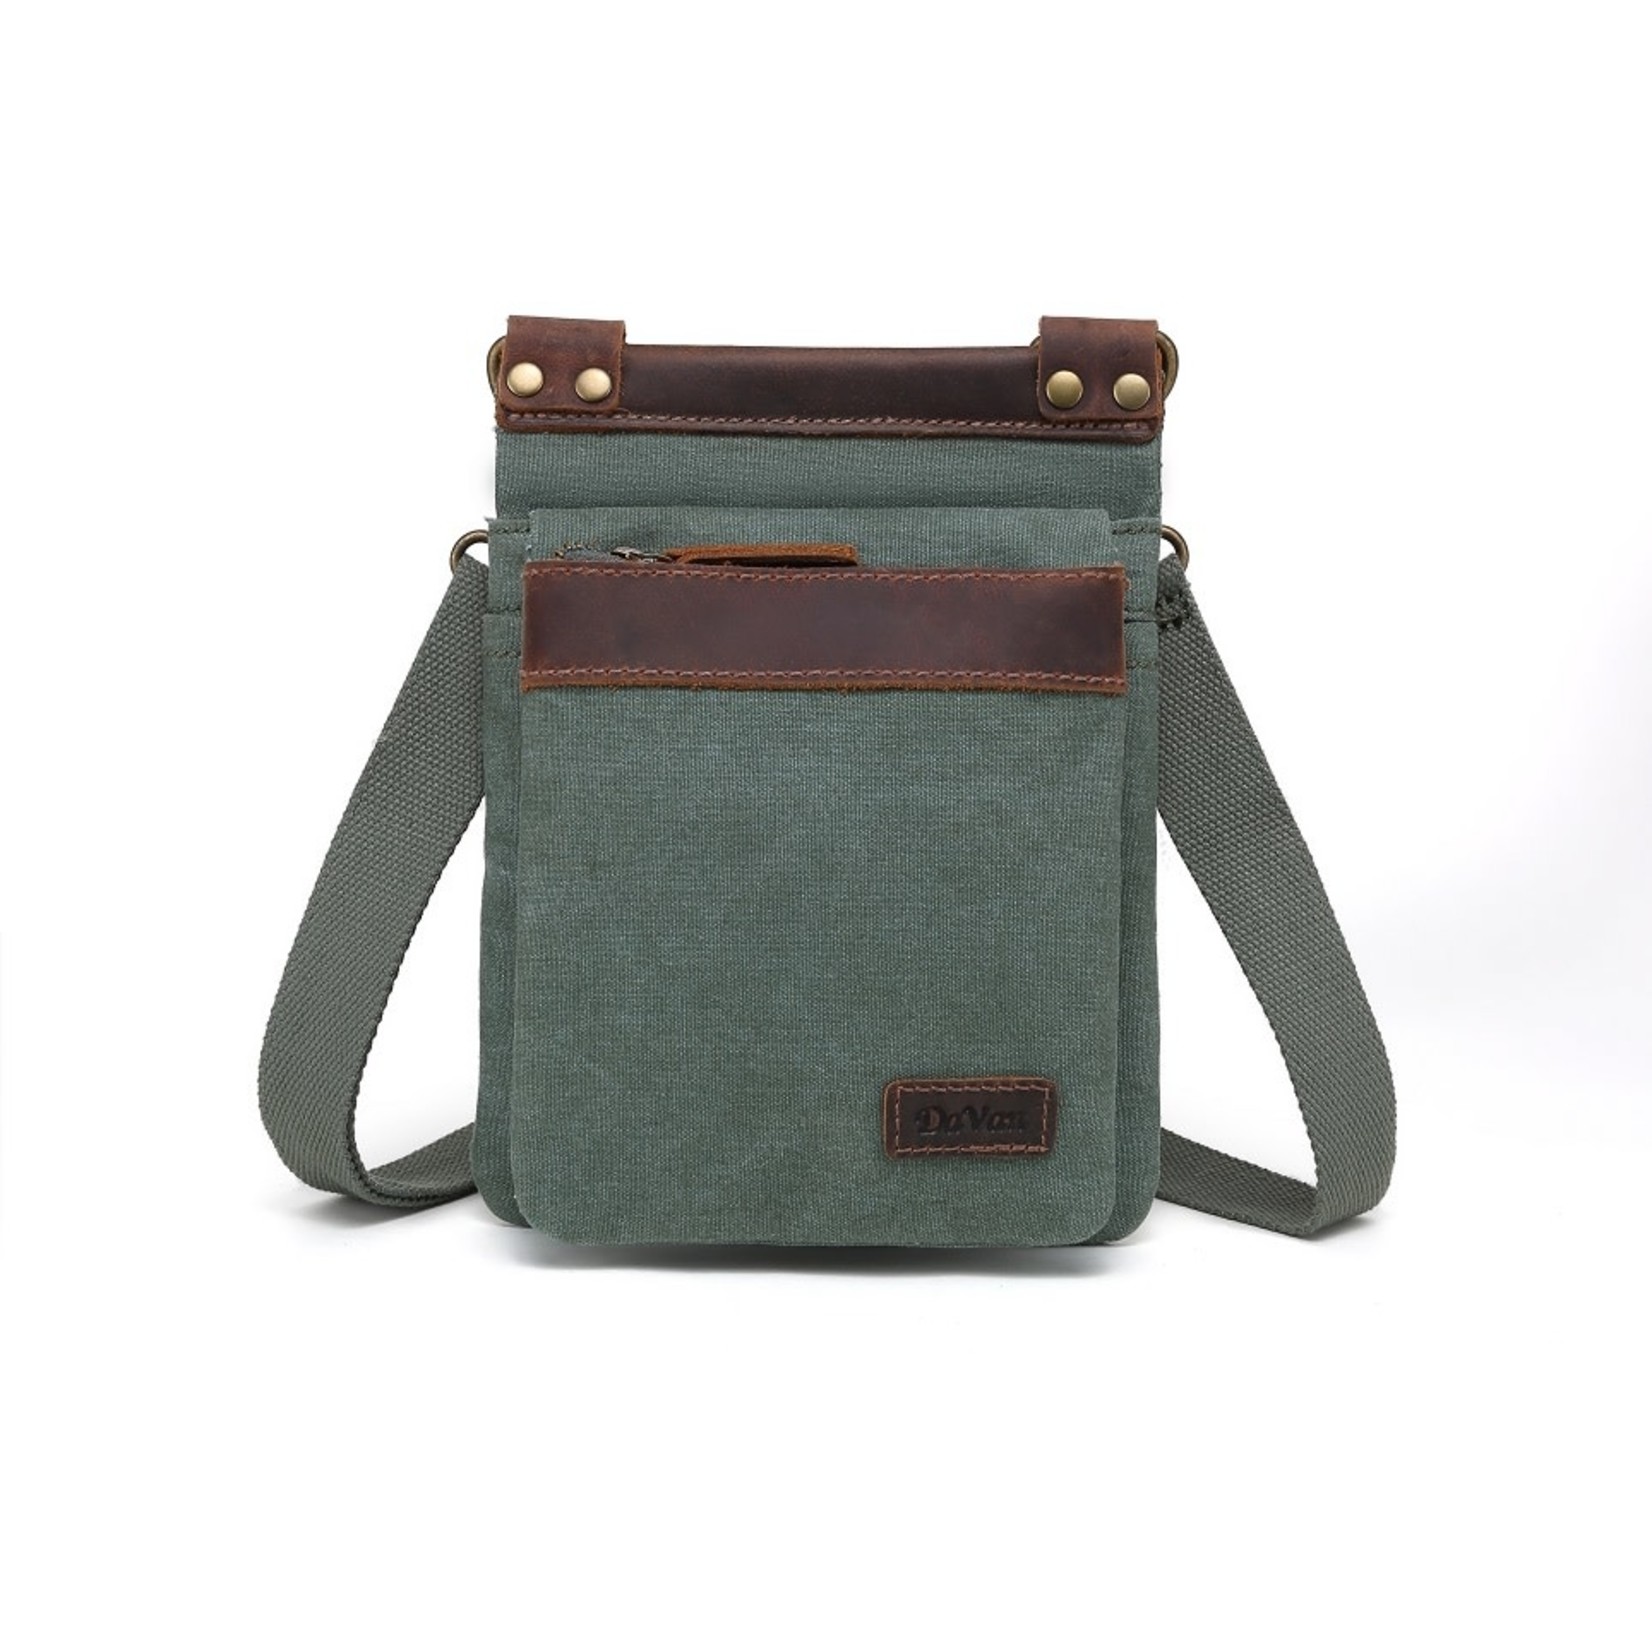 Davan Designs Shoulder Bag Turquoise Canvas w Hidden Pocket & Leather Trim